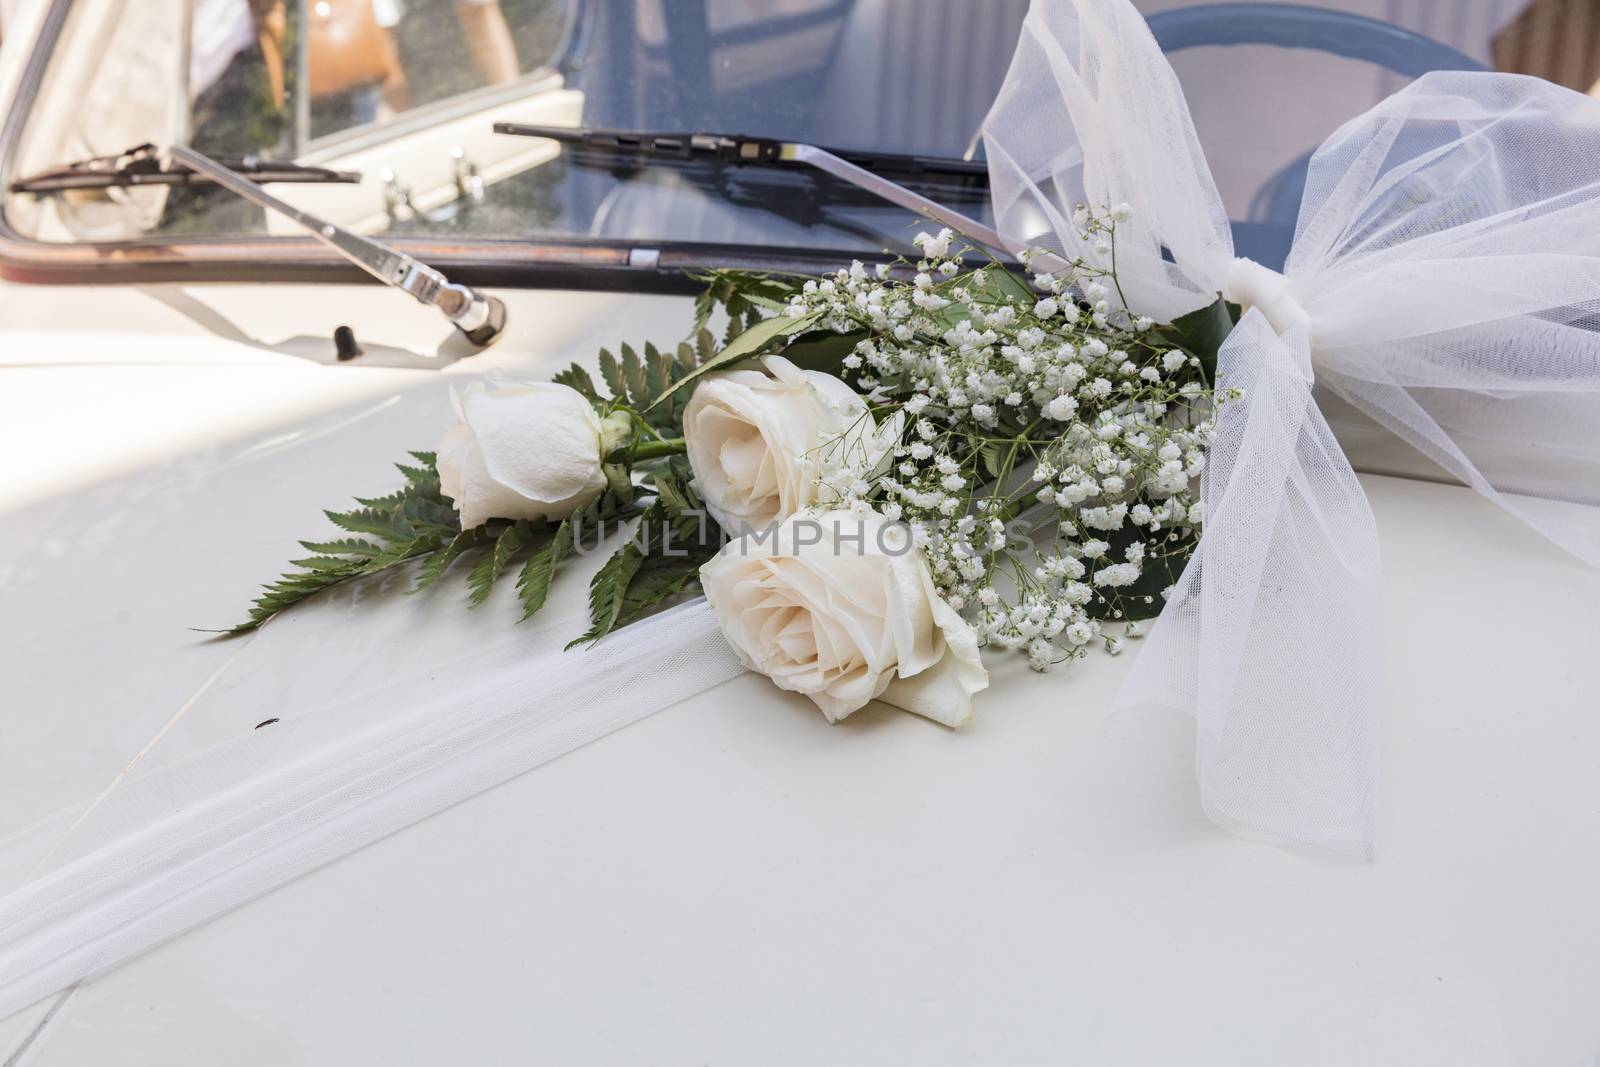 Malcesine, Lake Garda, Italy, August 2019, some wedding flowers on a Fiat 500 bonnet